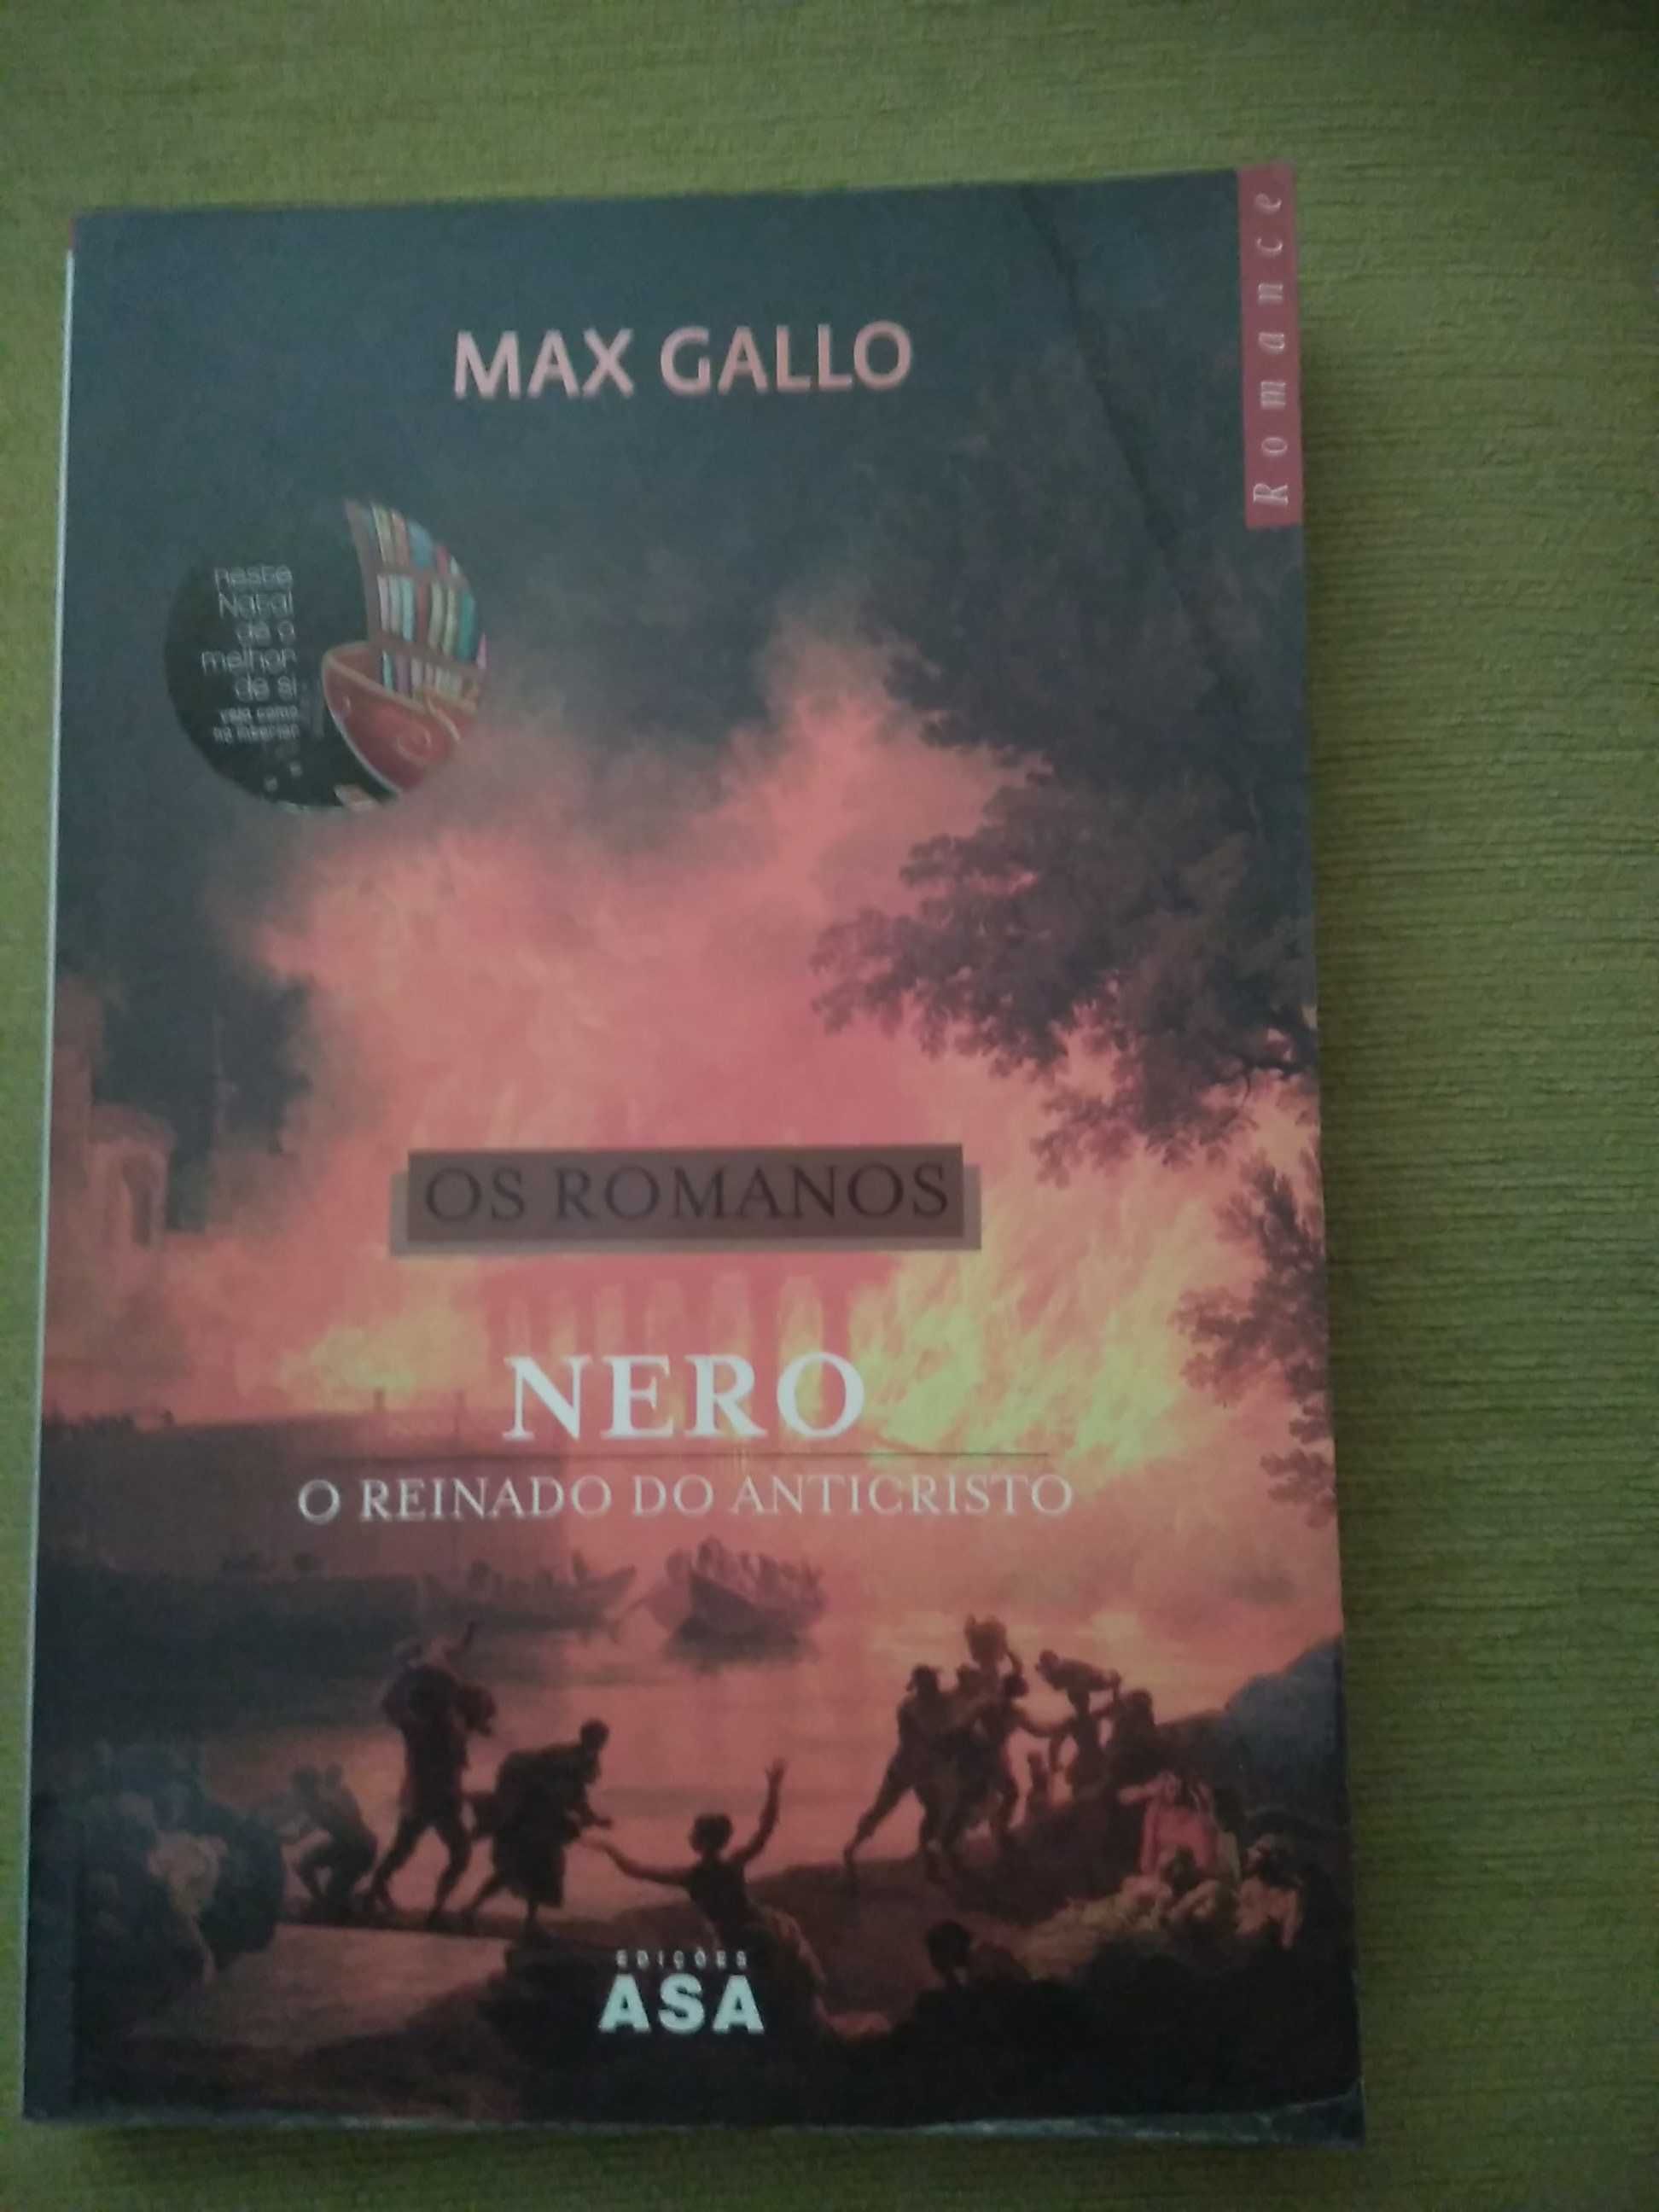 Max Gallo - Nero o reinado do anticristo